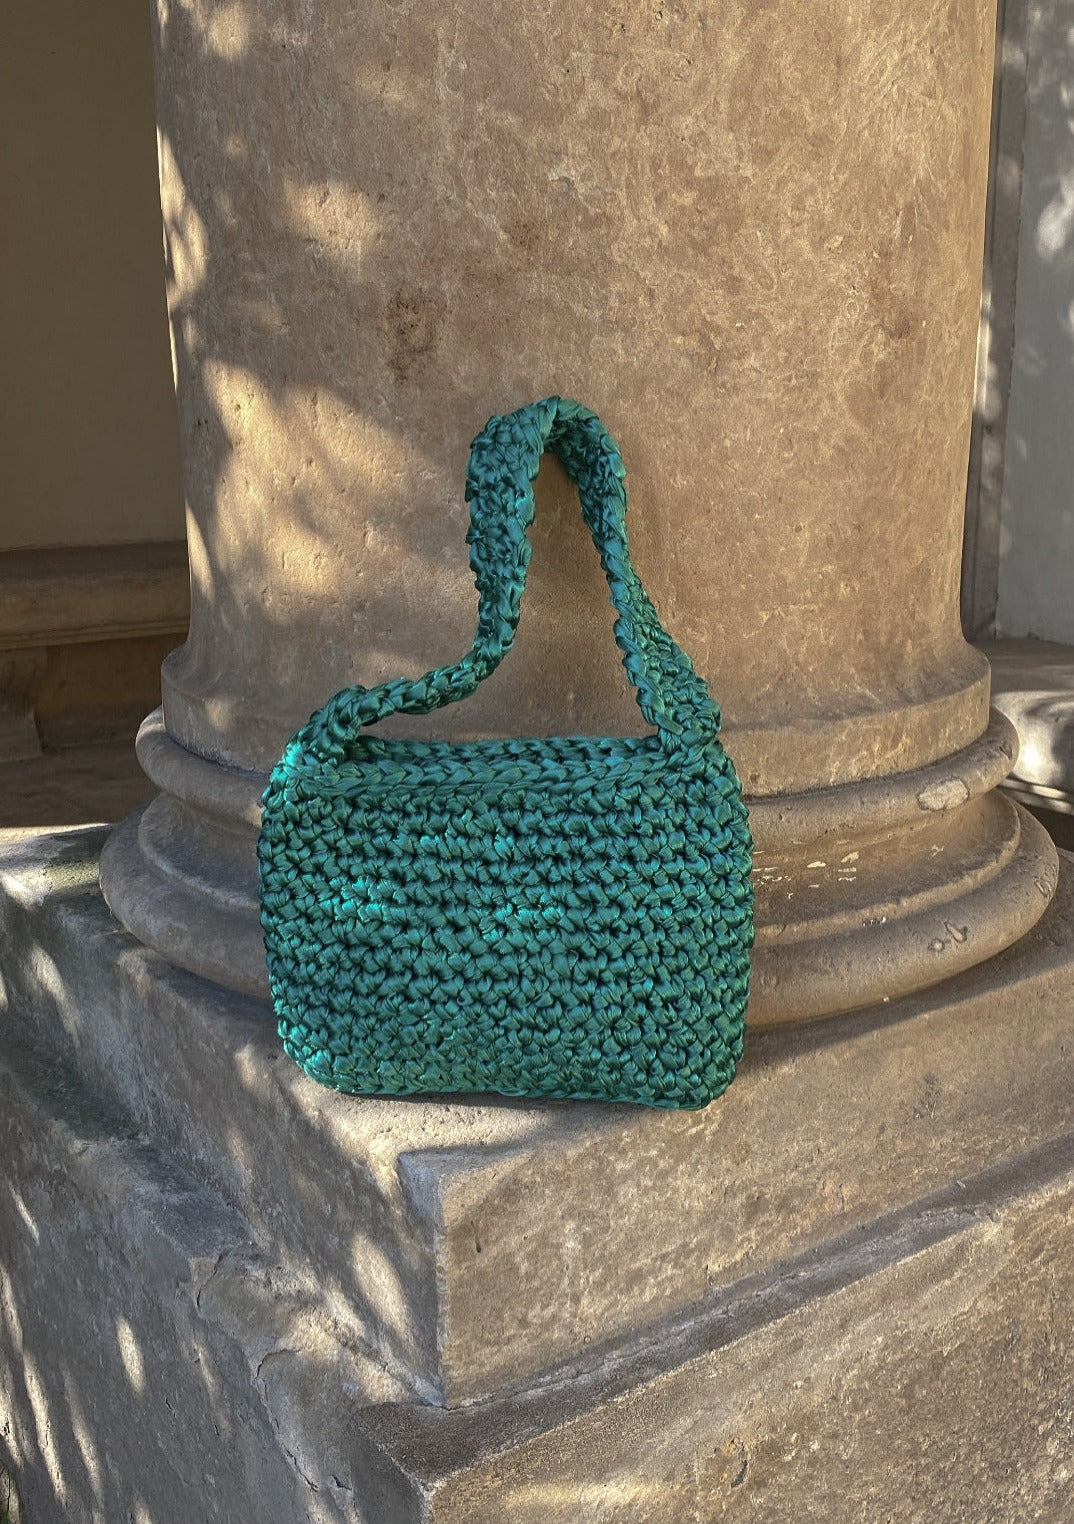 Forrest Green crochet bag